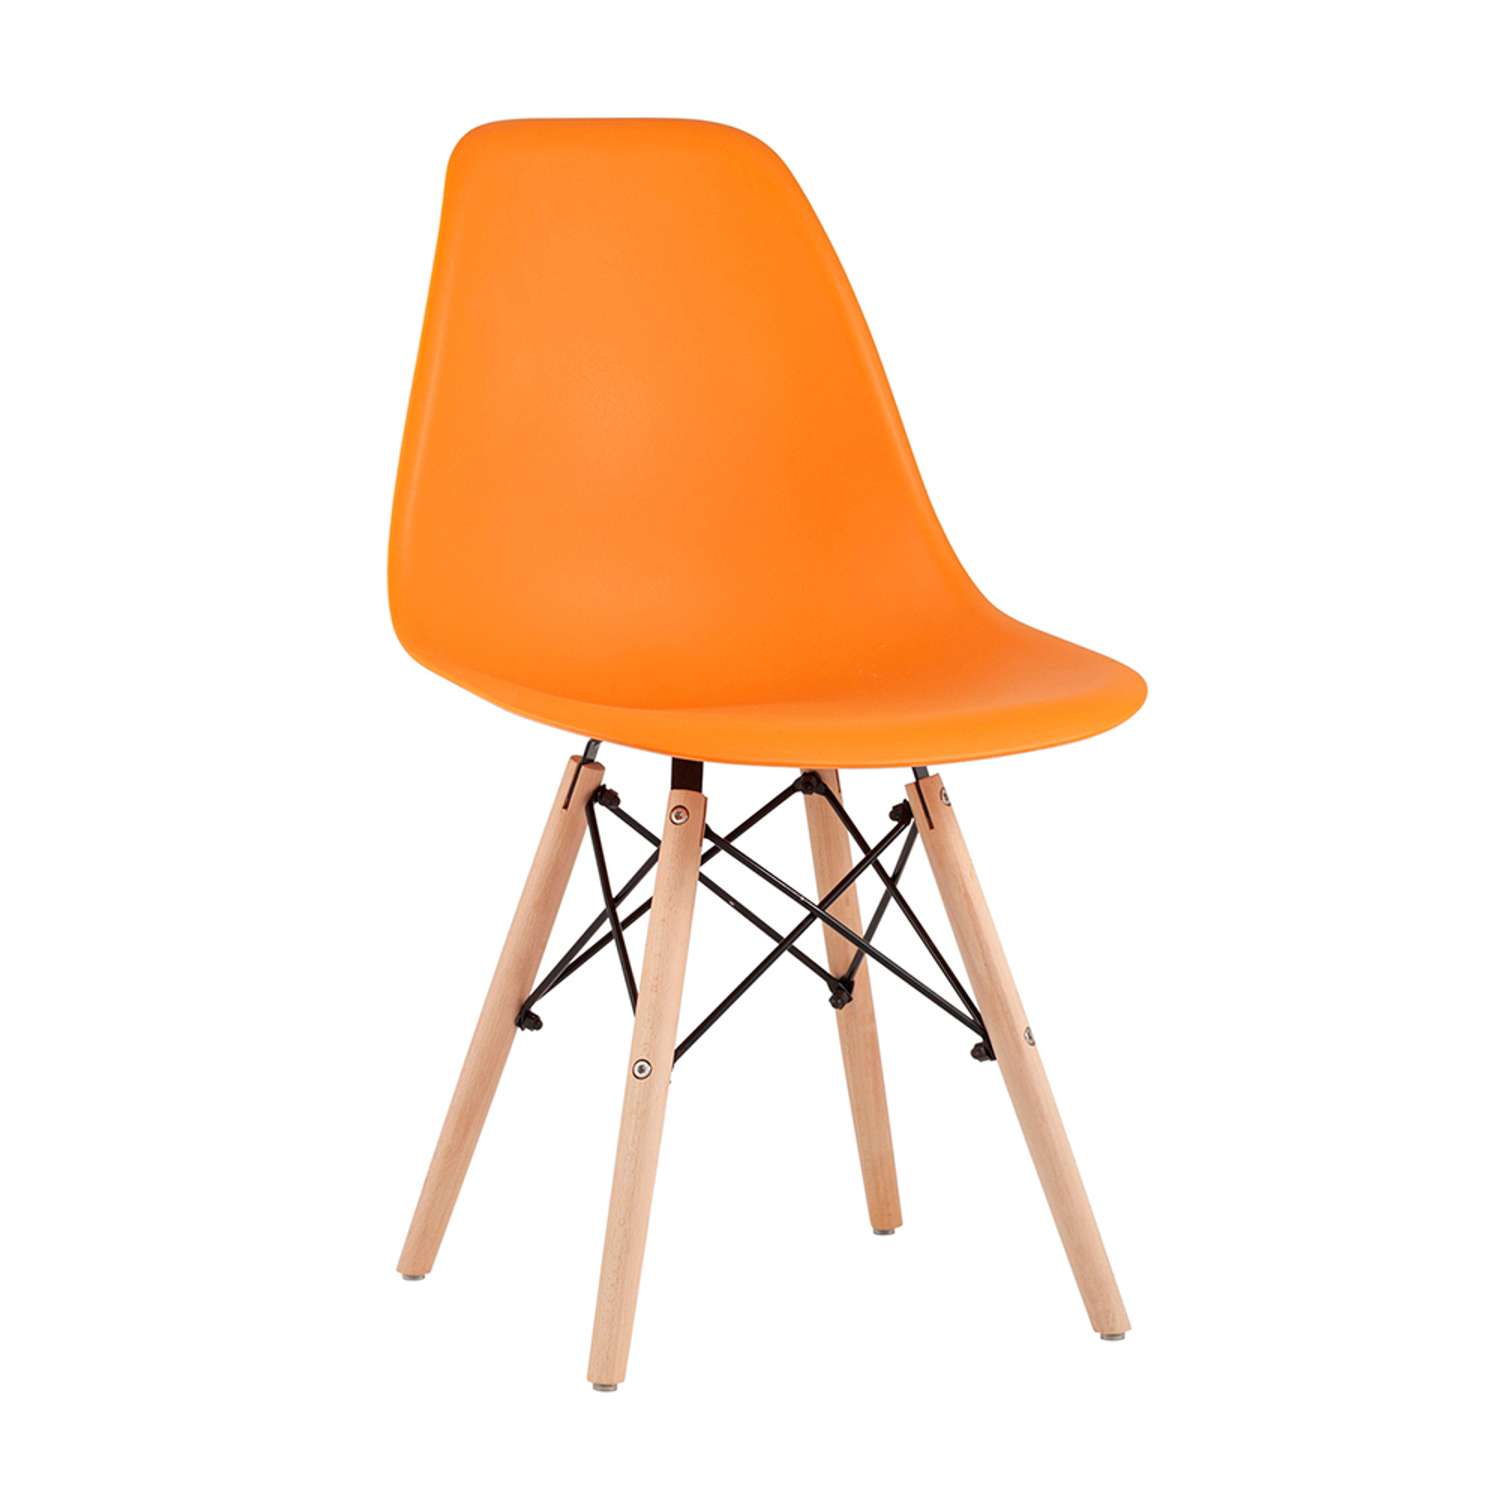 Комплект стульев Stool Group DSW Style оранжевый - фото 4